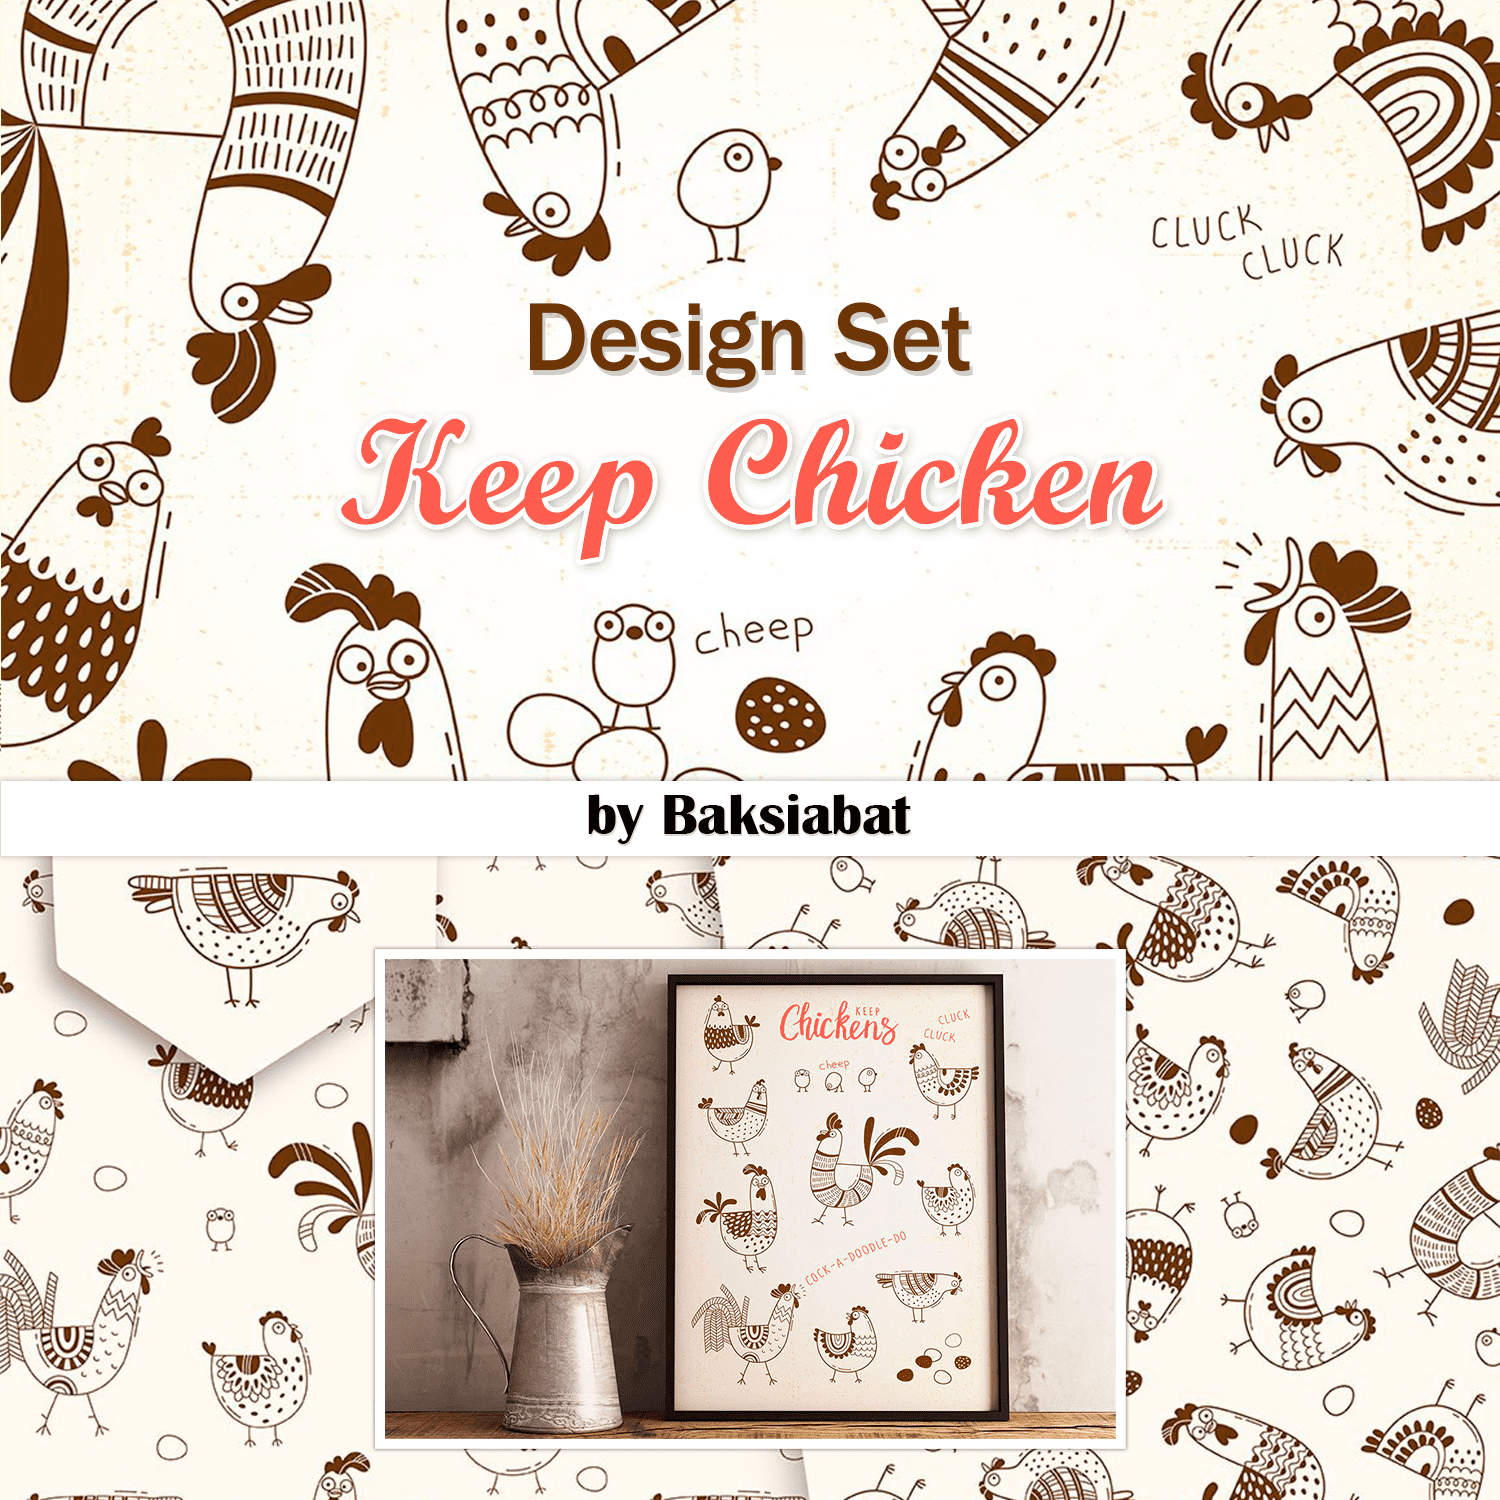 Keep Chicken - Design Set cover.